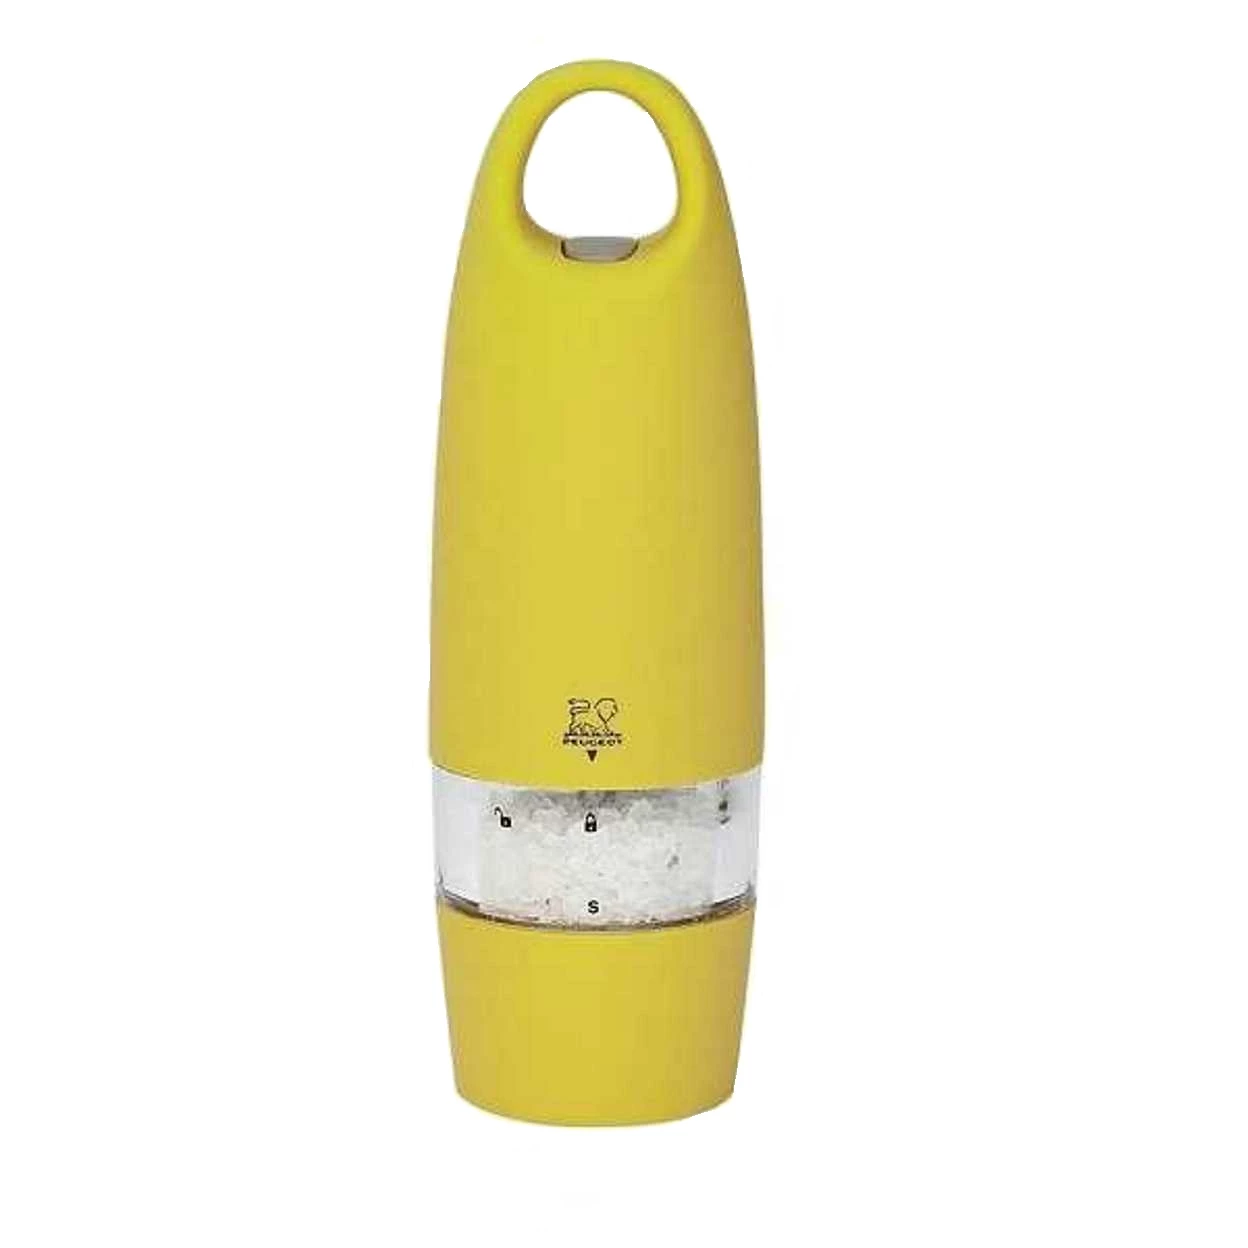 Млин електричний для солі Peugeot ZEST, висота 18 см, жовтий Peugeot 29685 фото 0